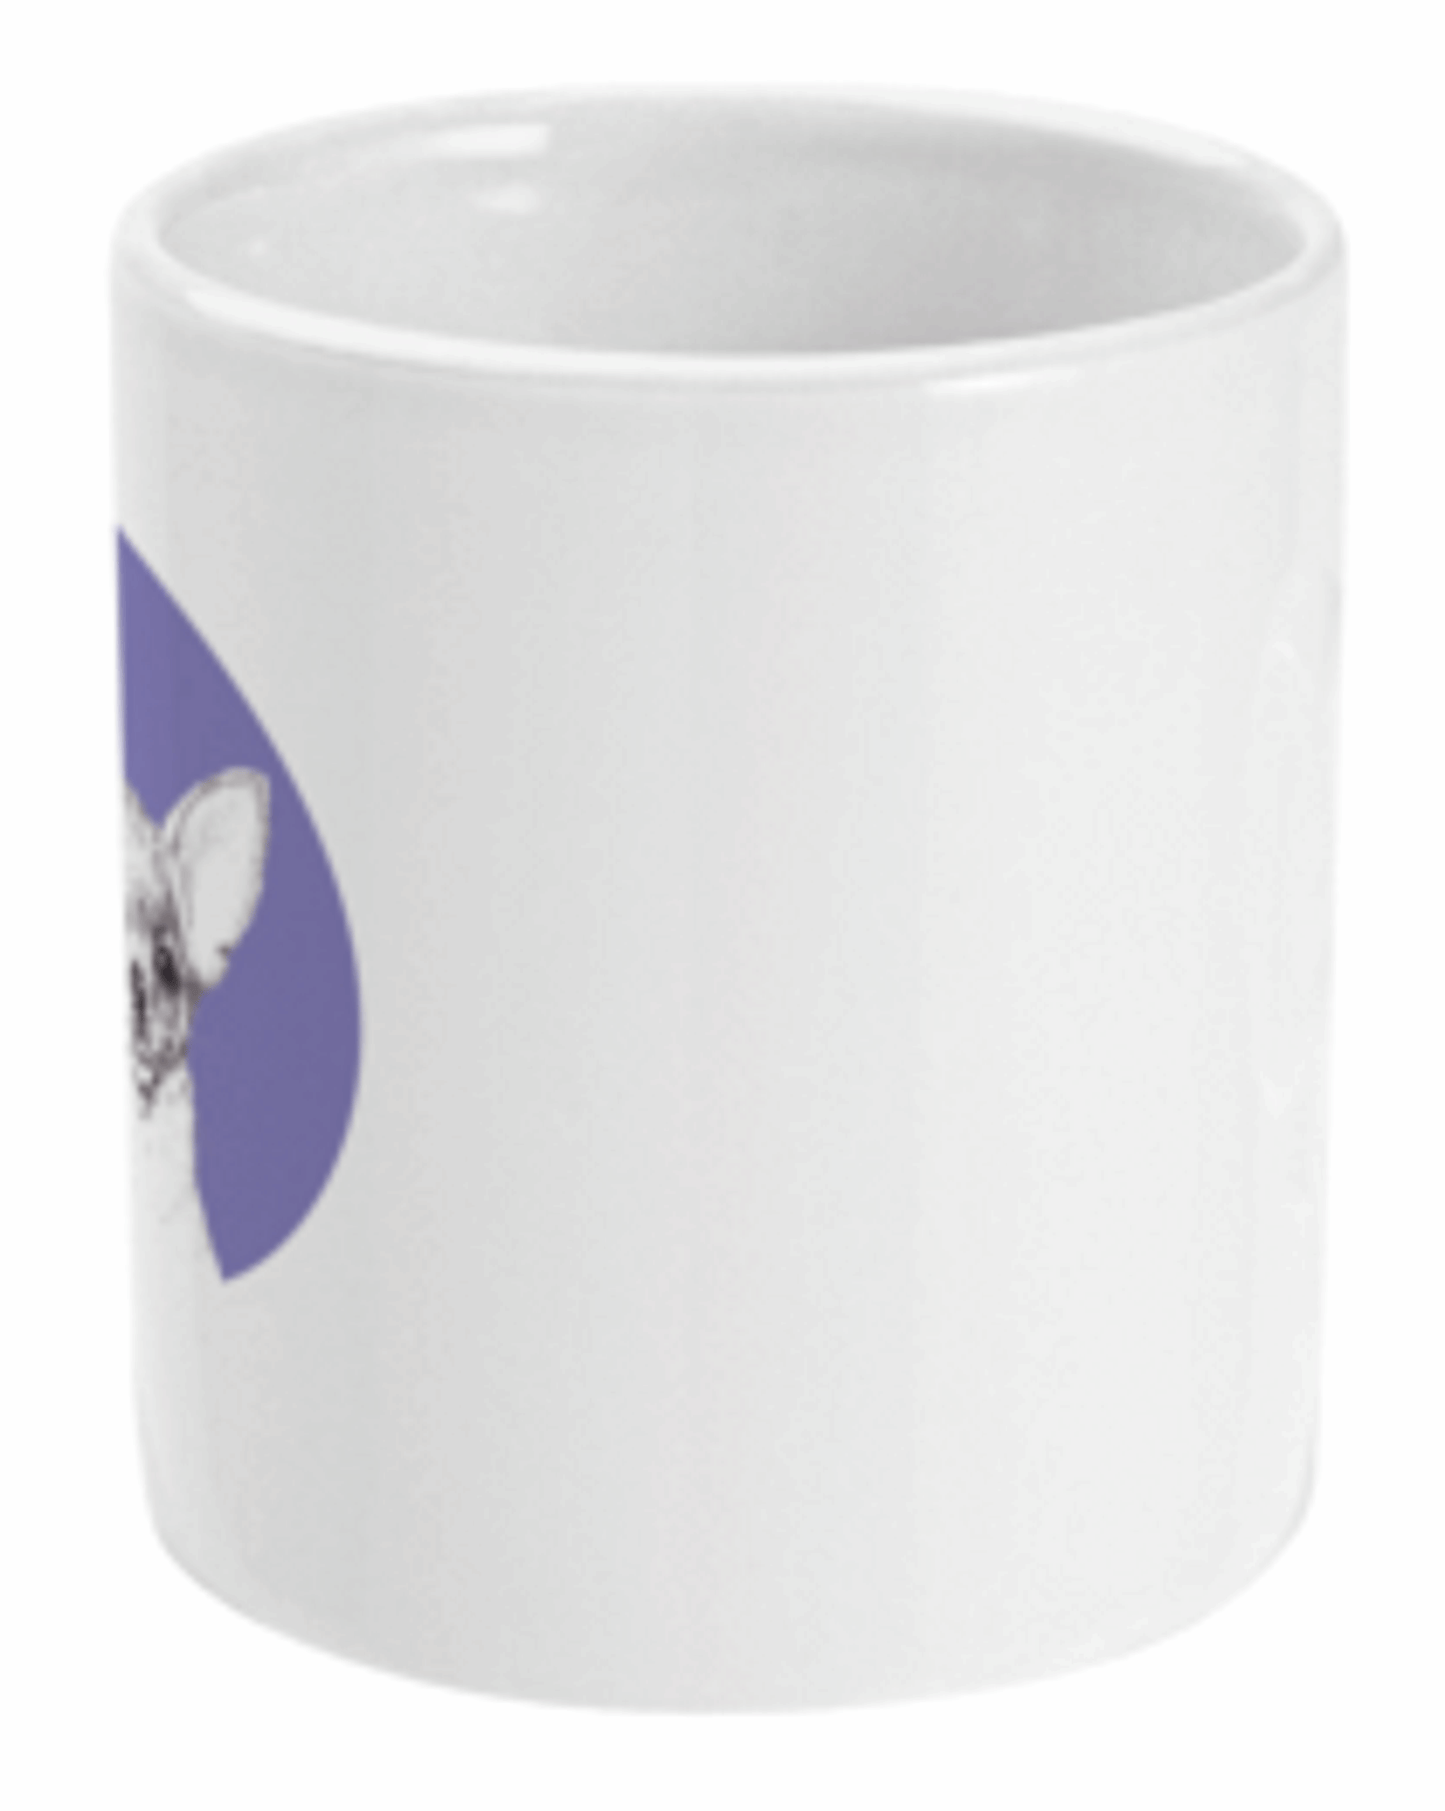  Chihuahua in Purple Circle Coffee Mug by Free Spirit Accessories sold by Free Spirit Accessories